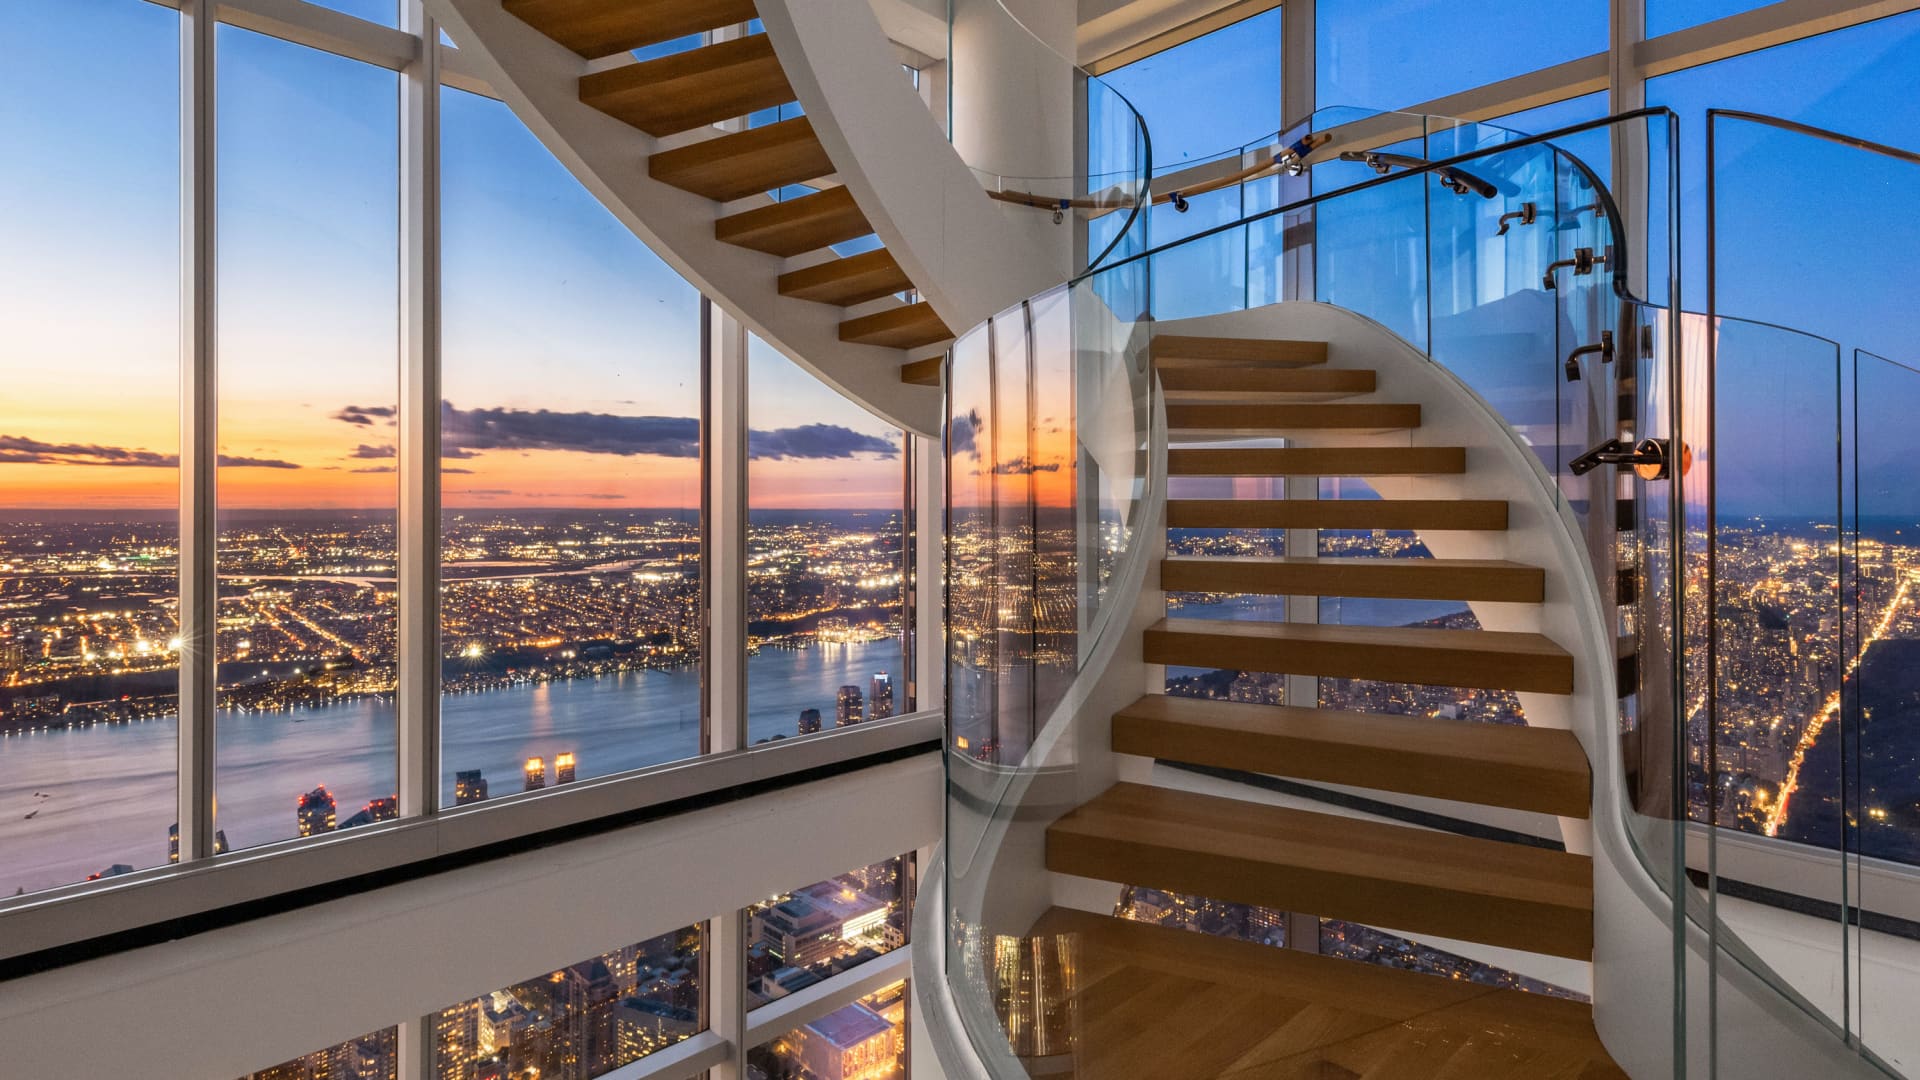 Inside the 0 million penthouse on ‘Billionaires’ Row’